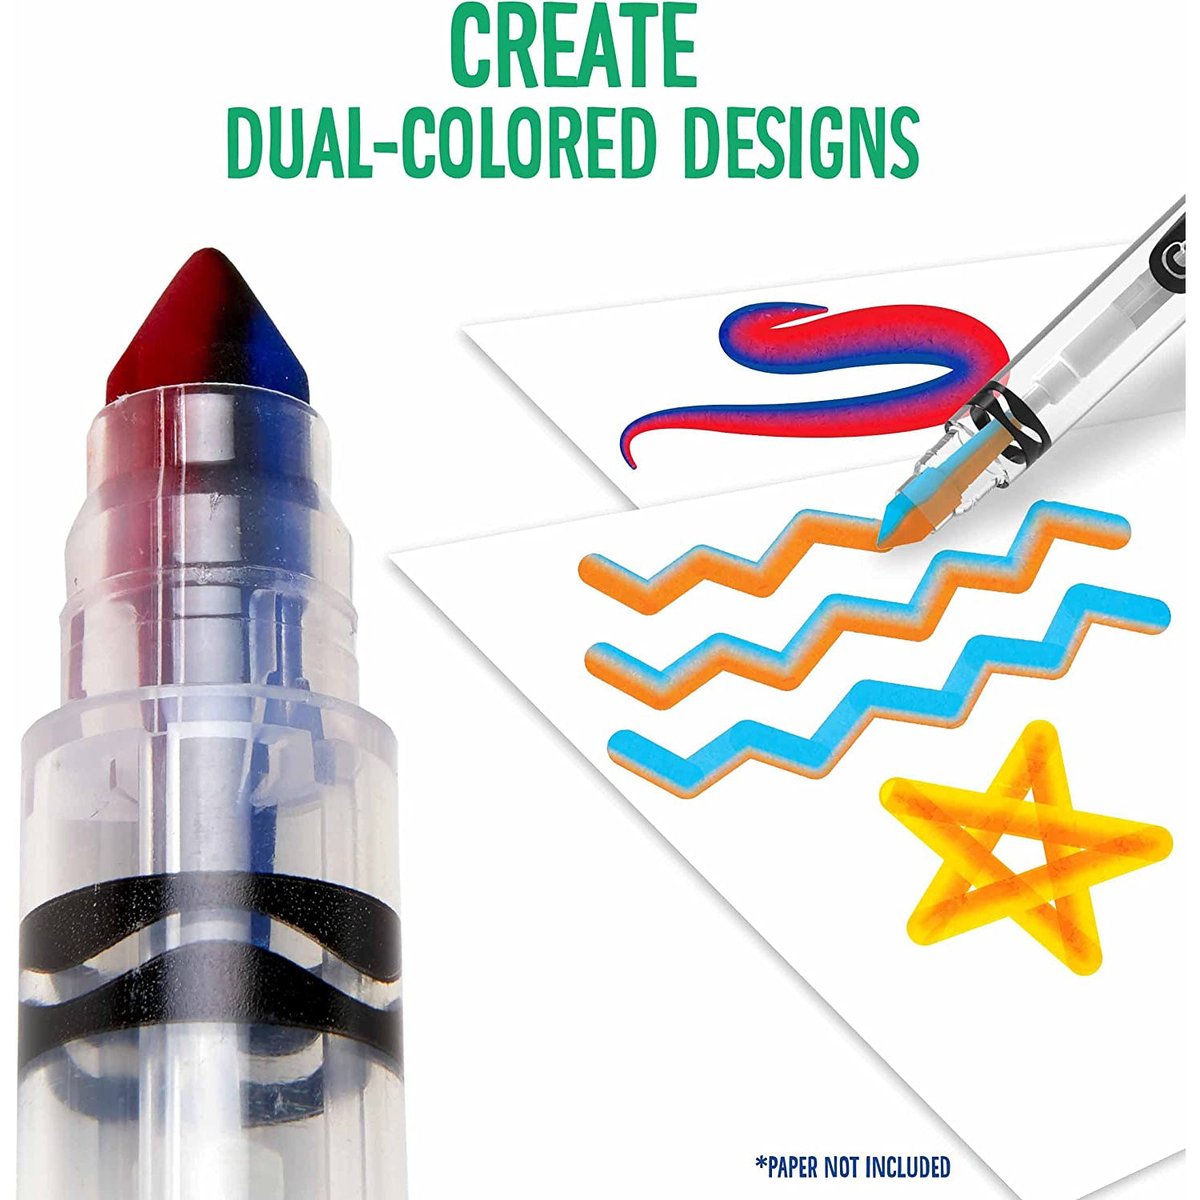 Crayola Marker Mixer Art Kit, 1 - Pick 'n Save